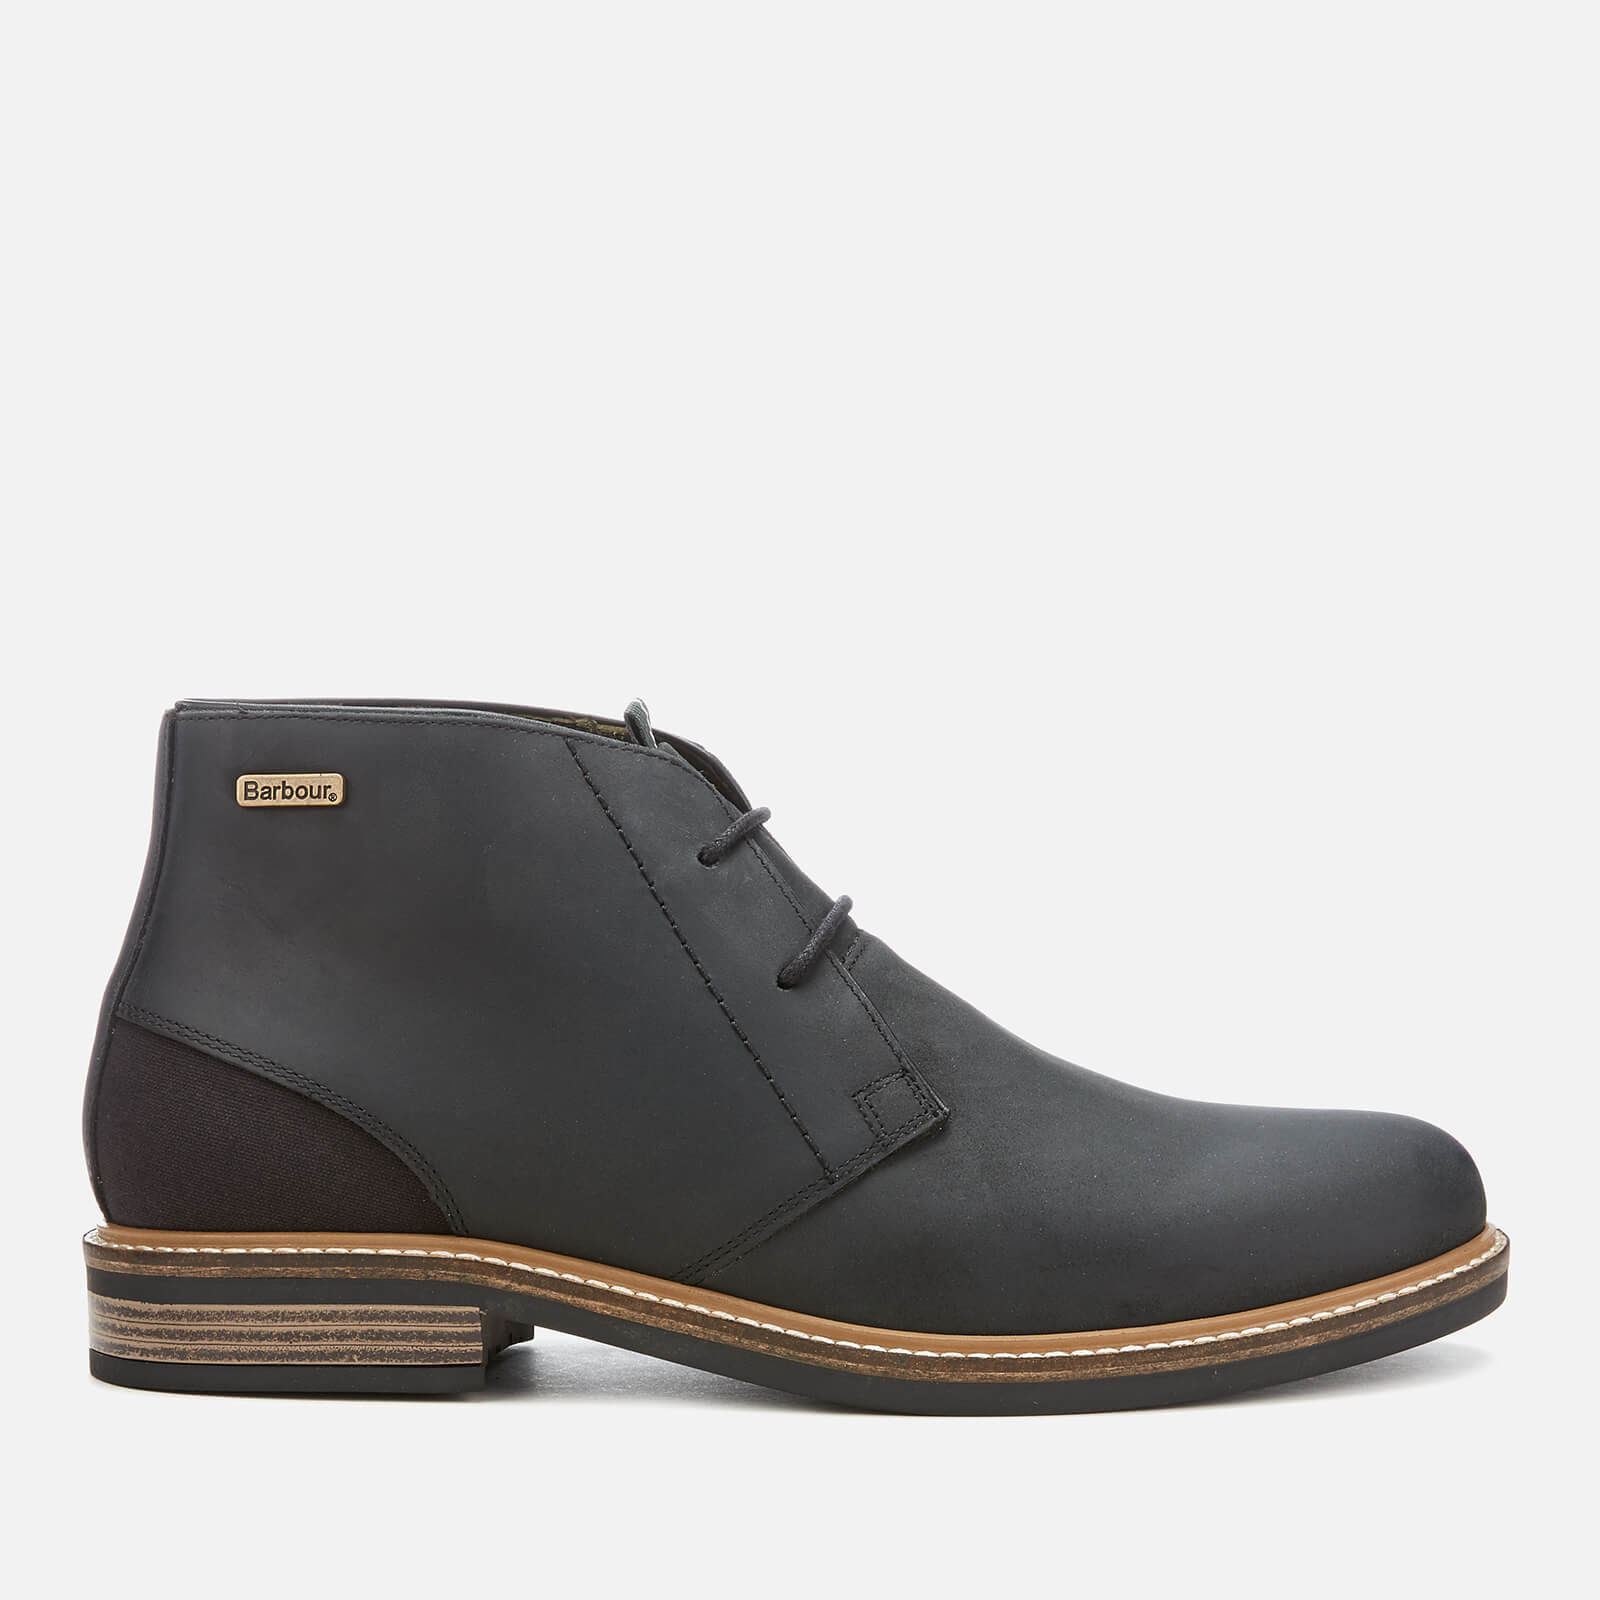 Barbour Men’s Readhead Leather Chukka Boots - Black